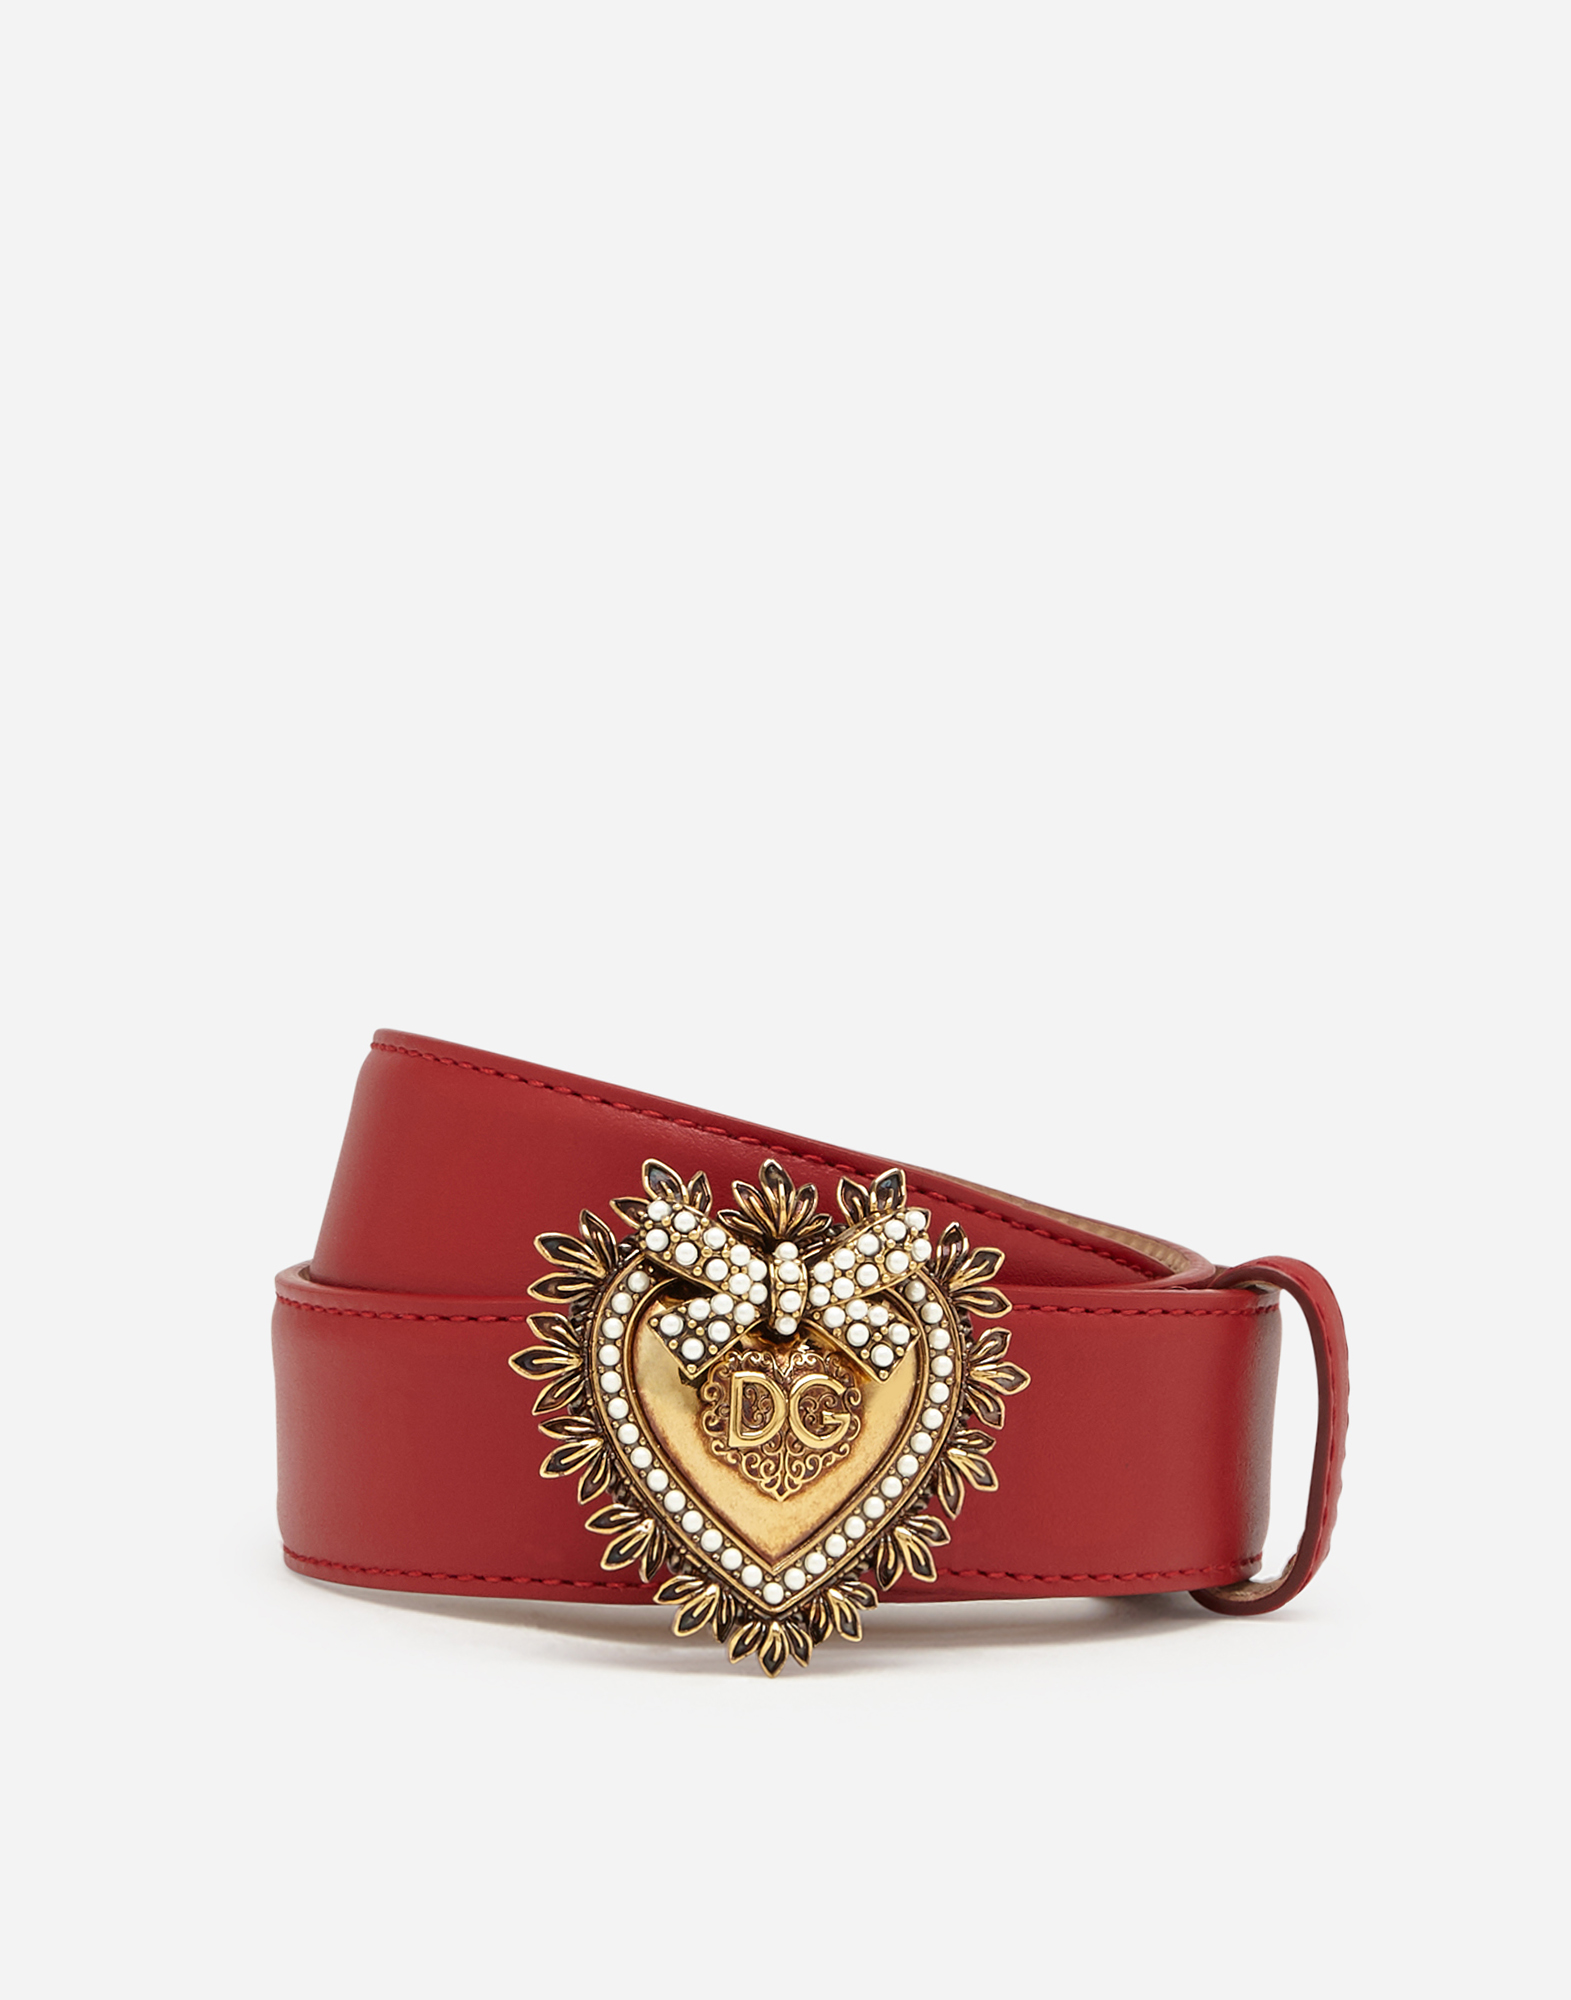 Devotion belt in lux leather in Red